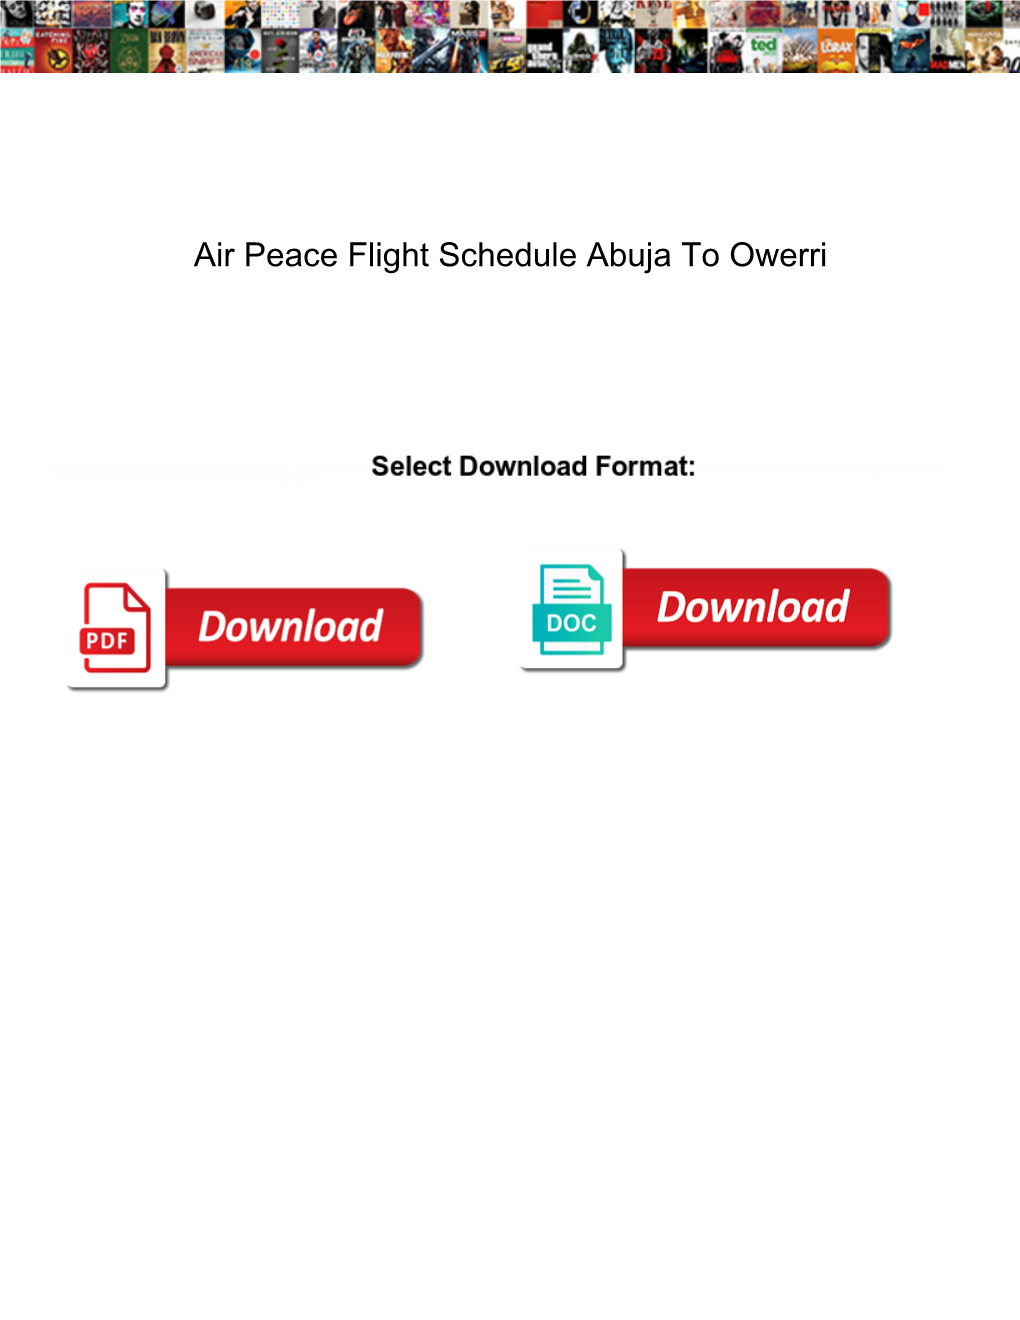 Air Peace Flight Schedule Abuja to Owerri